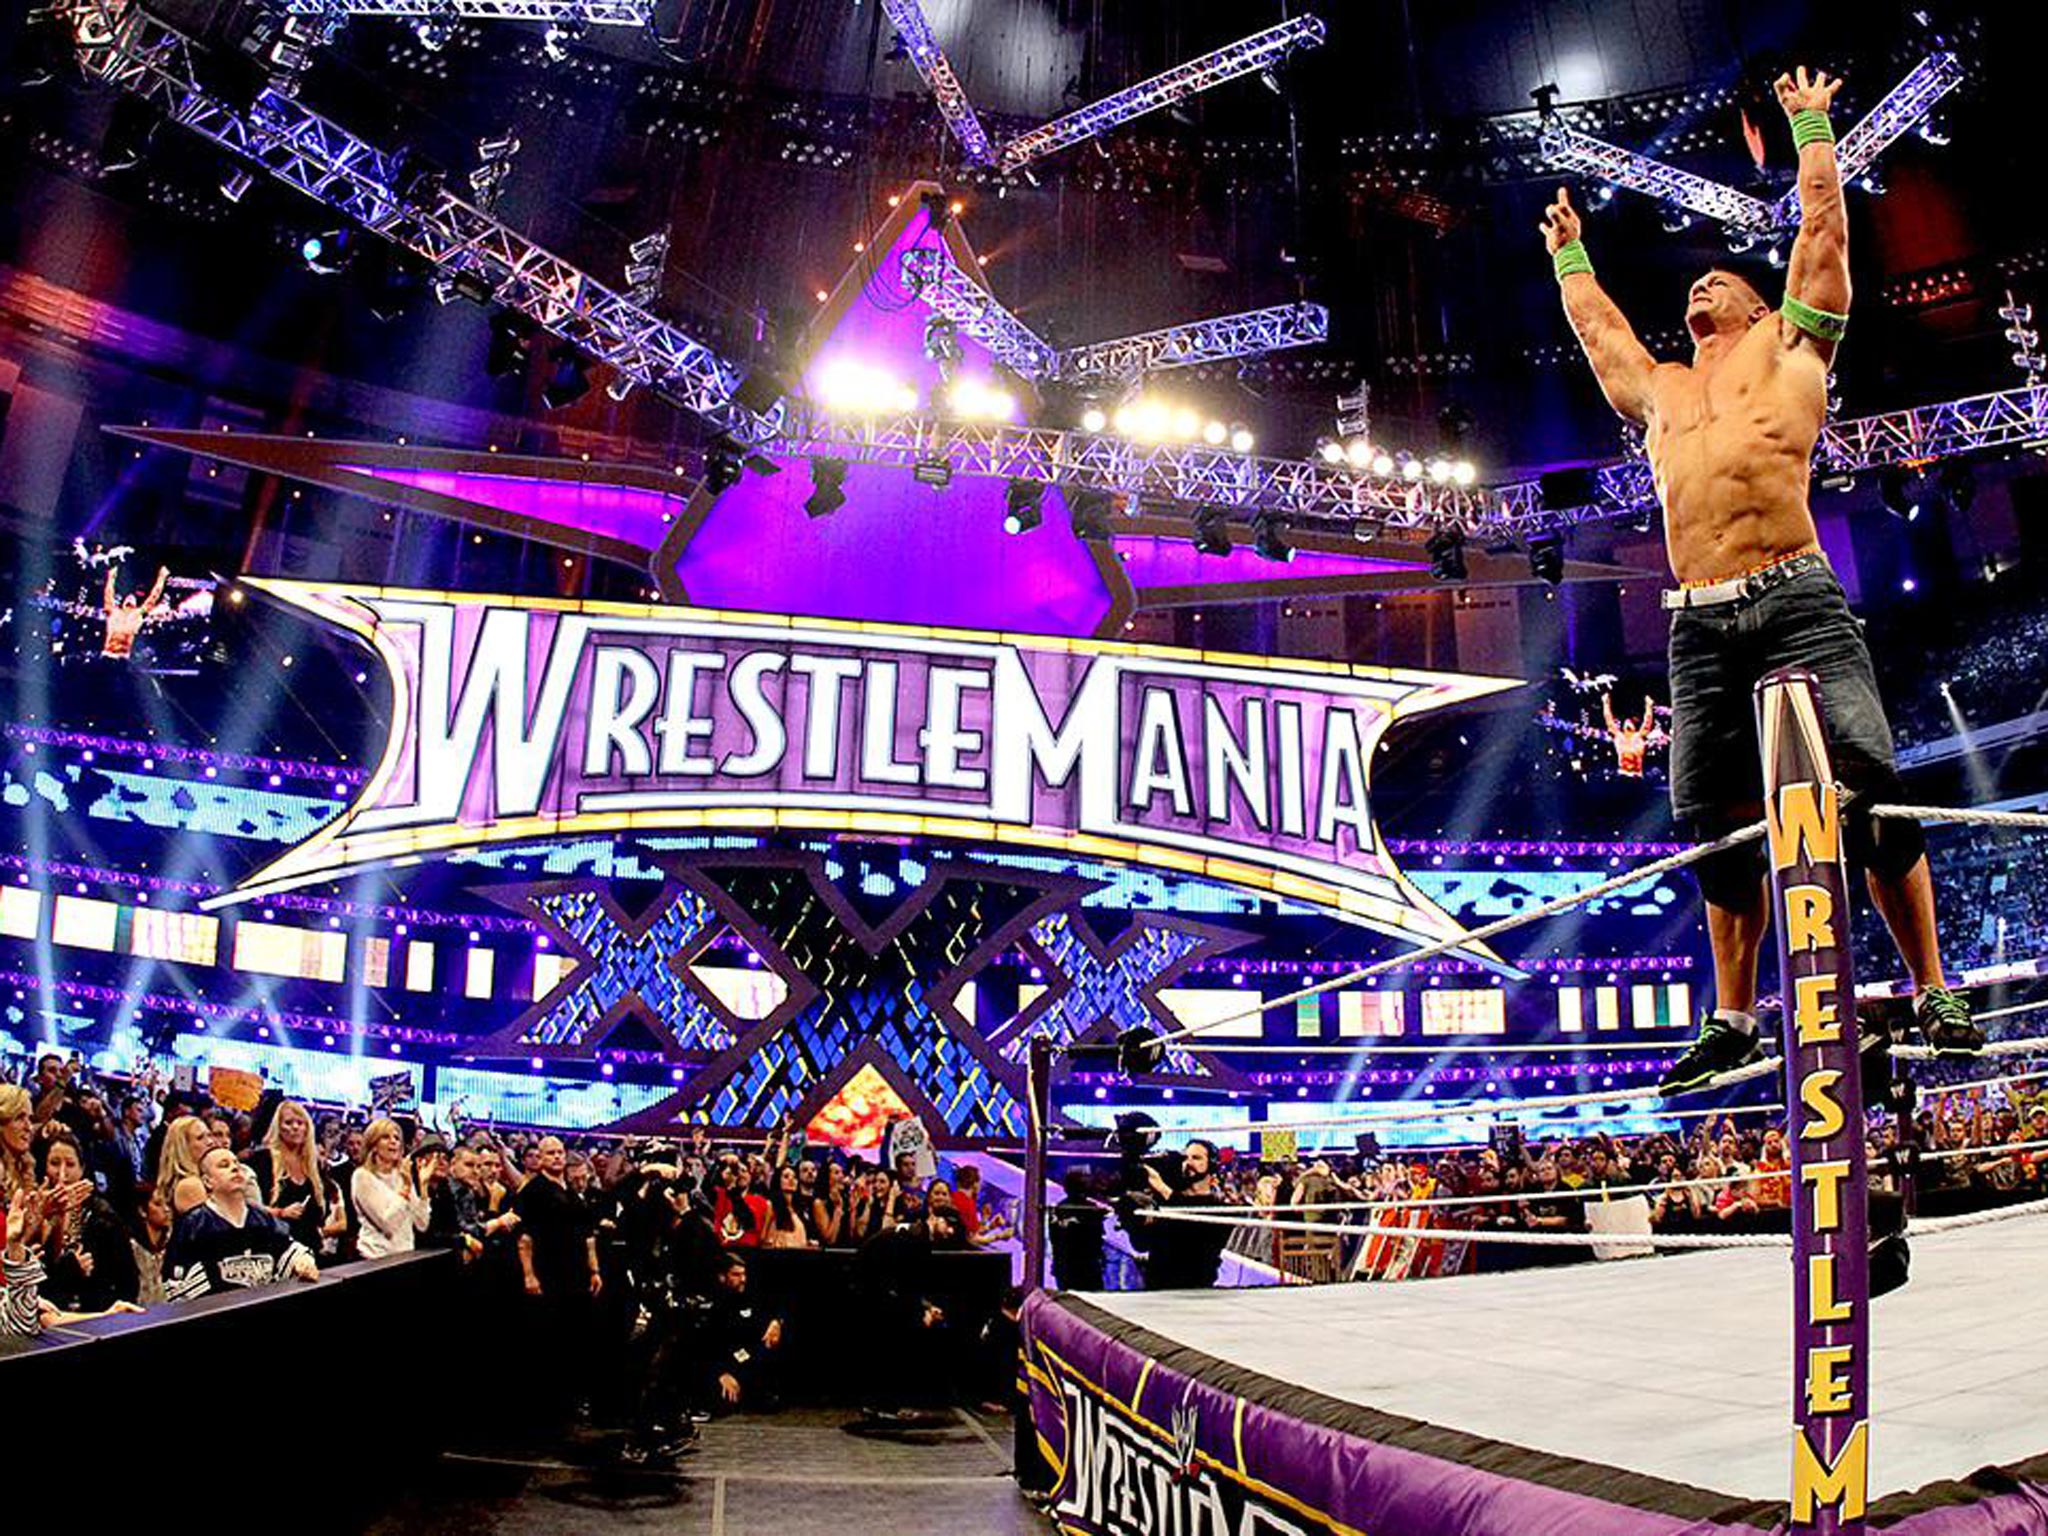 John Cena pictured after winning at Wrestlemania